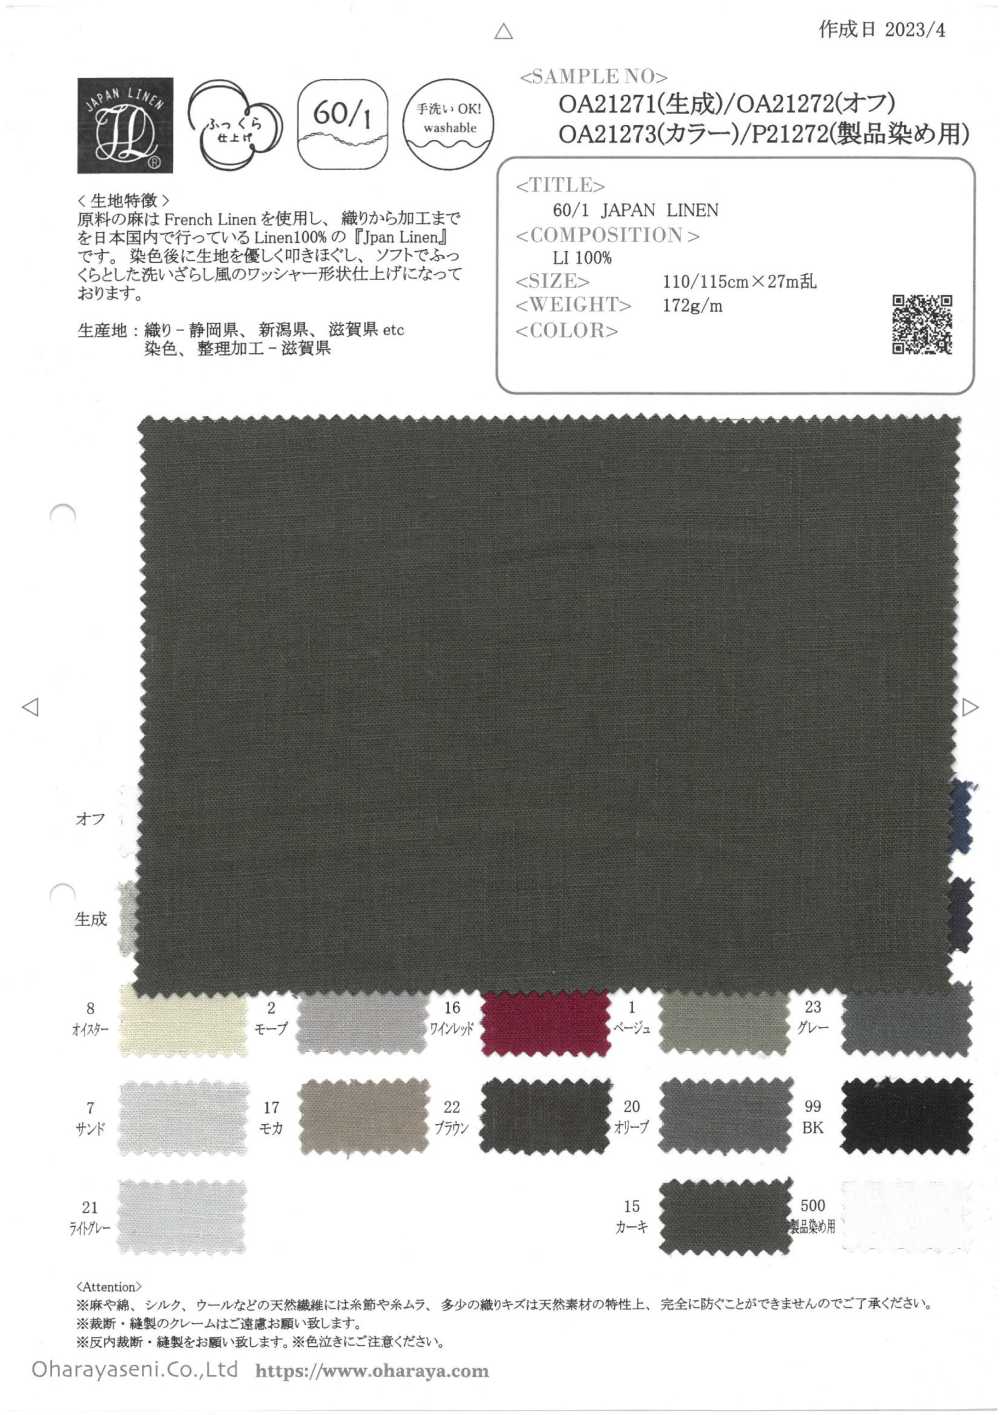 OA21272 60/1・JAPAN LINEN (Blanc Cassé)[Fabrication De Textile] Oharayaseni